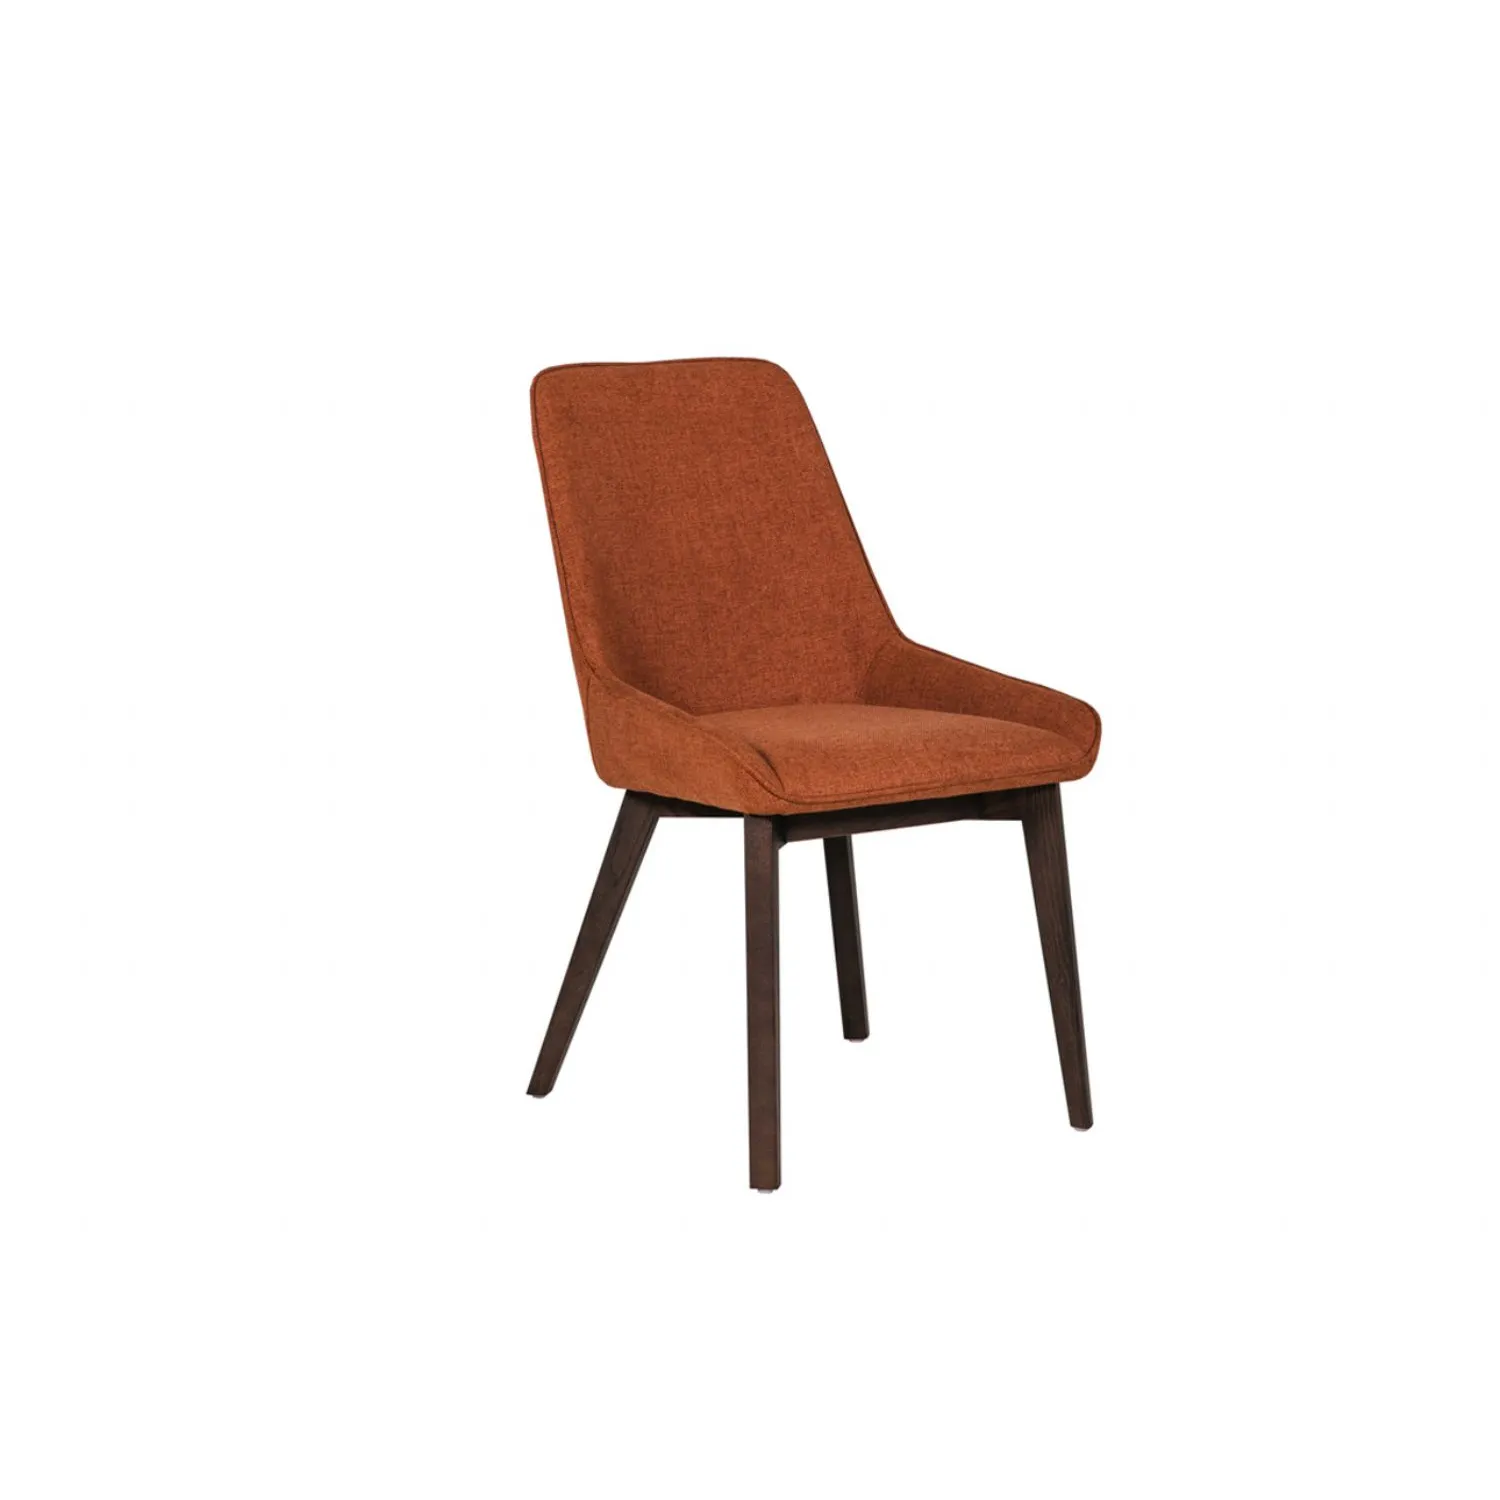 Rust Orange Fabric Dining Chair with Dark Wood Legs